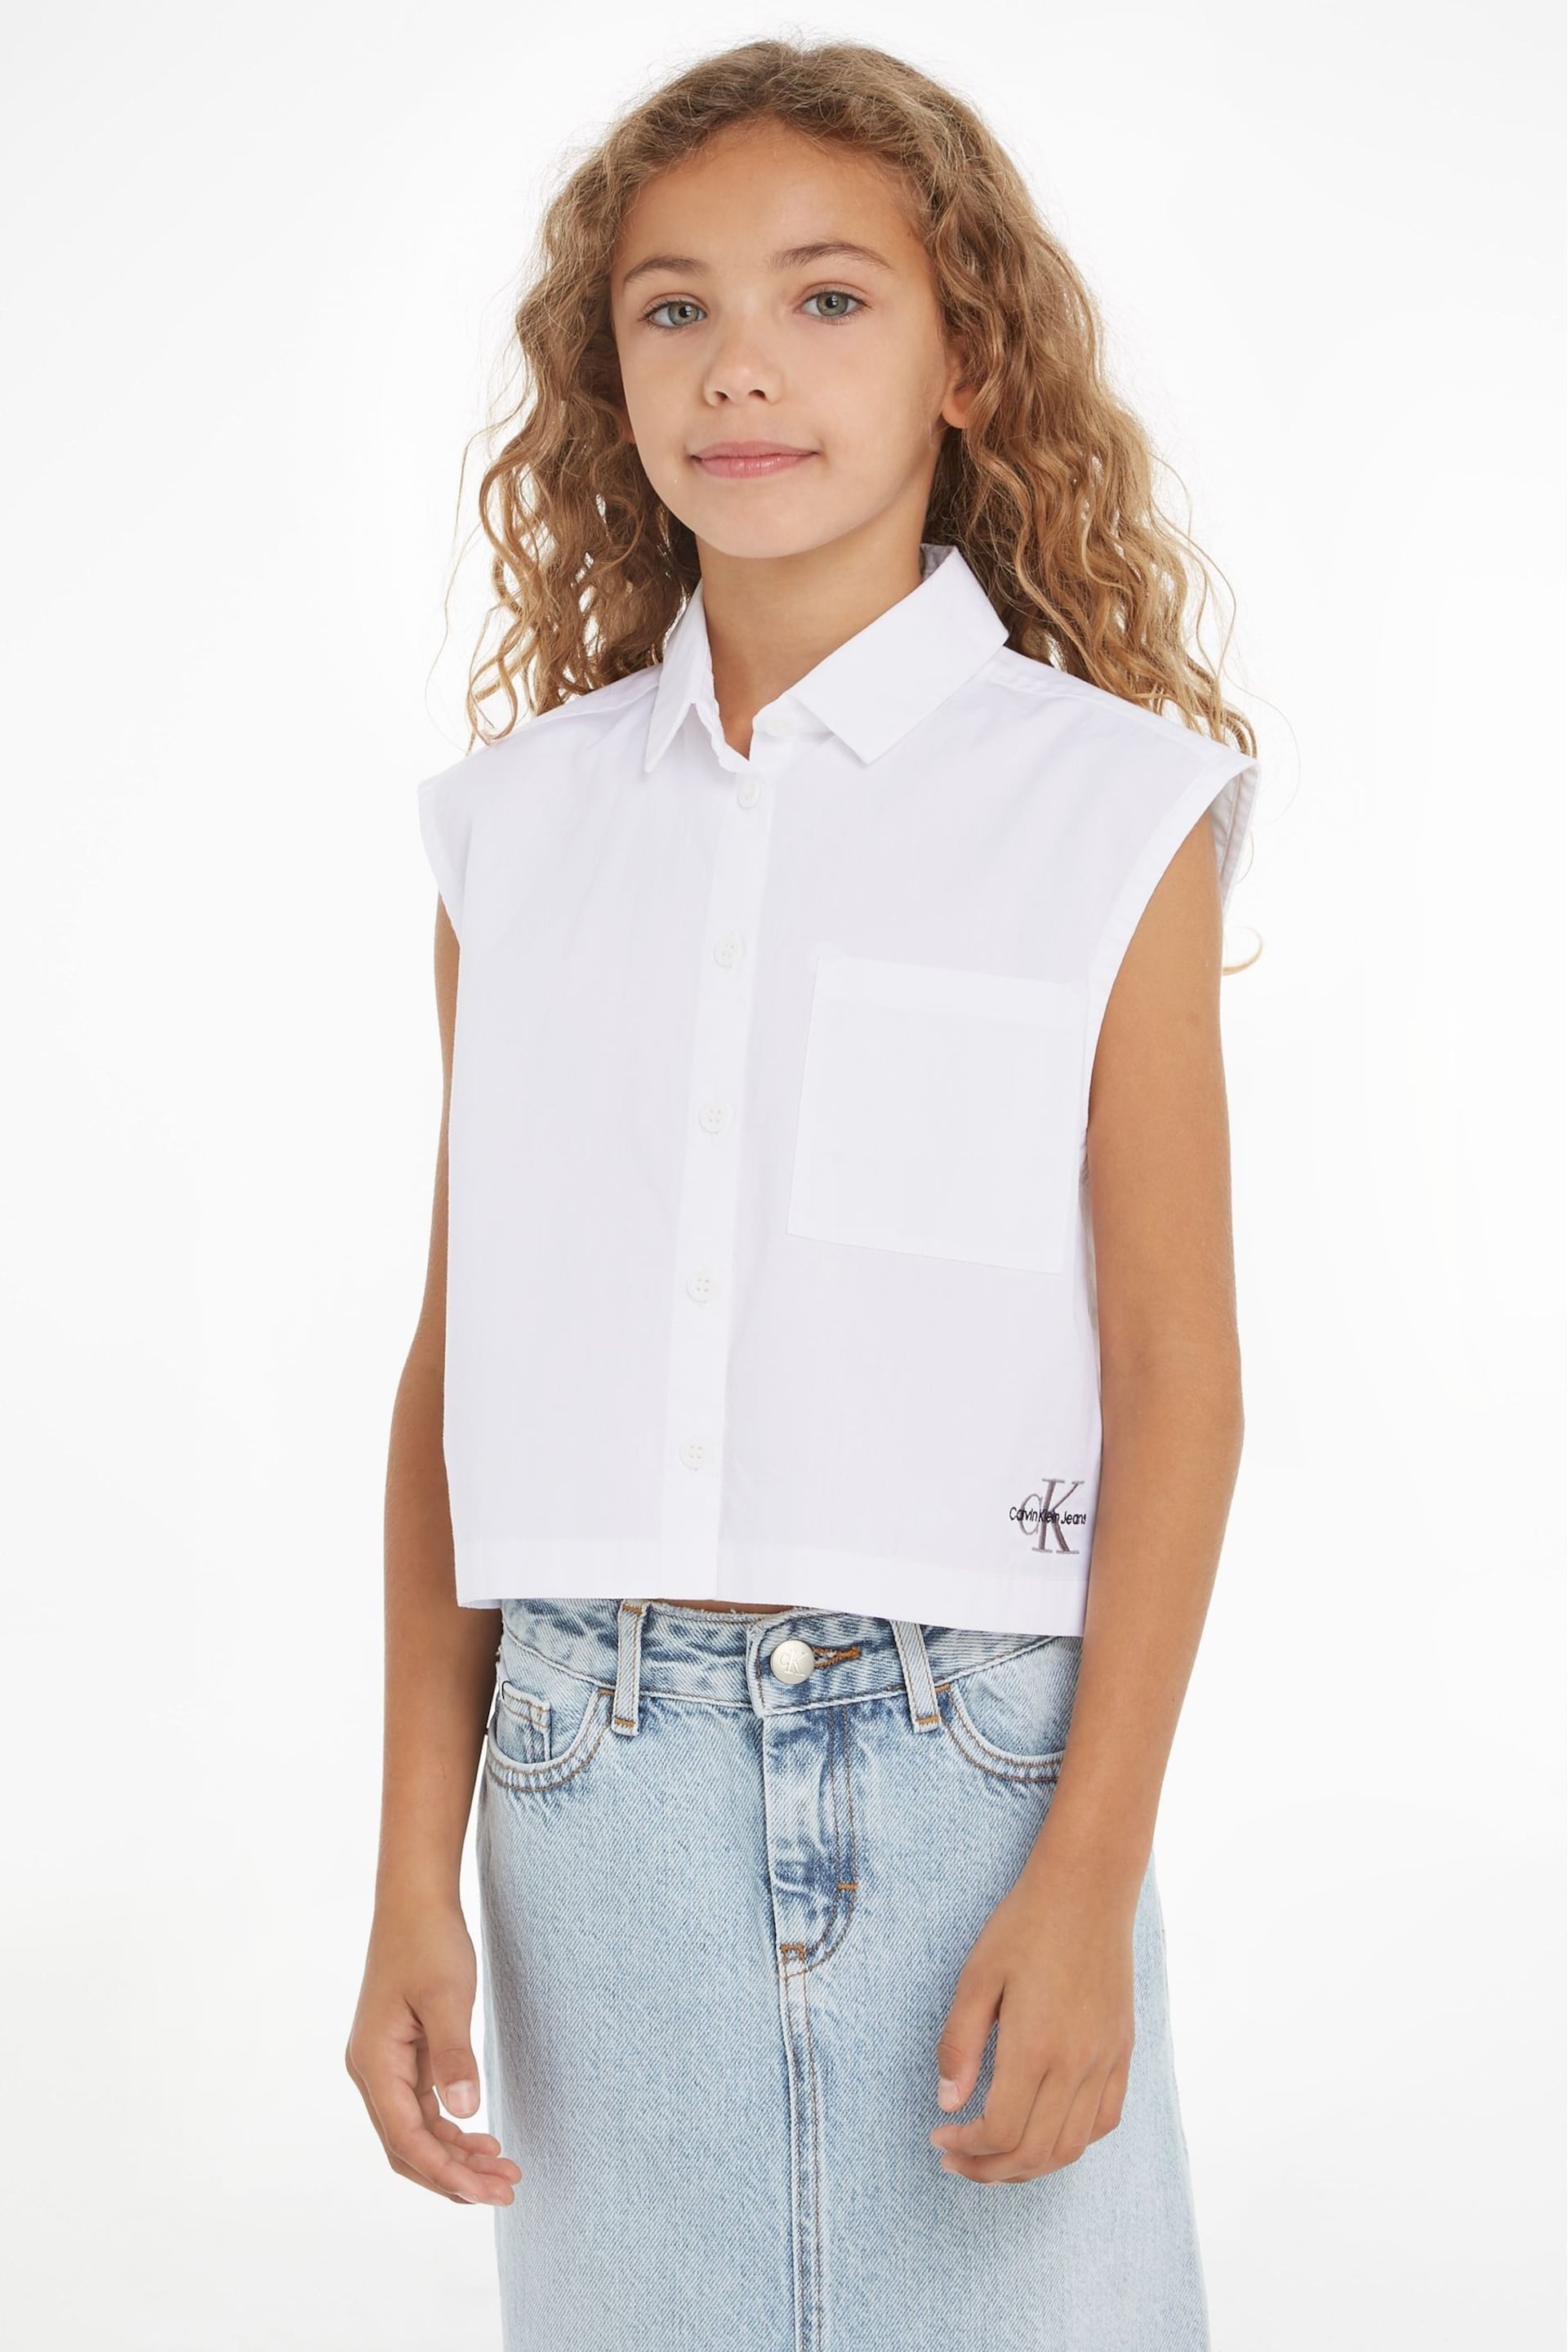 Calvin Klein White Monogram Woven Shirt - Image 1 of 5